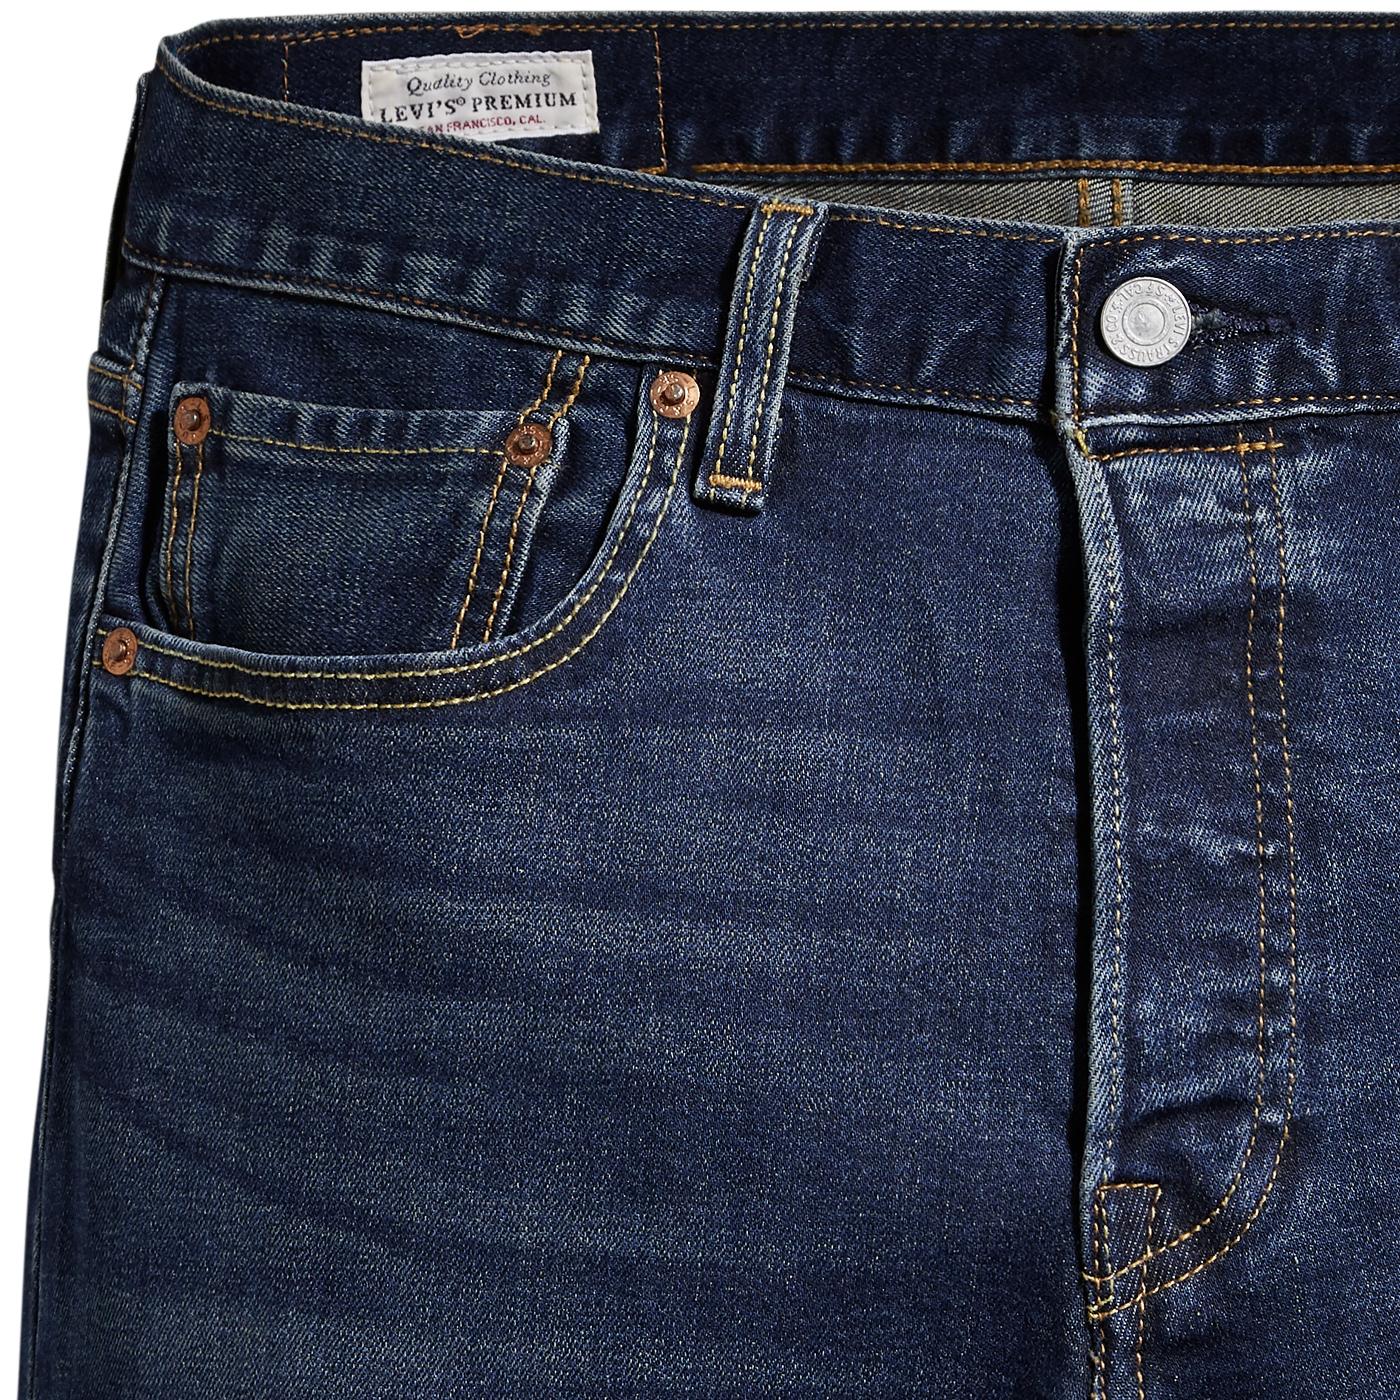 LEVI'S 501 Mod Original Straight Denim Jeans in Block Crusher